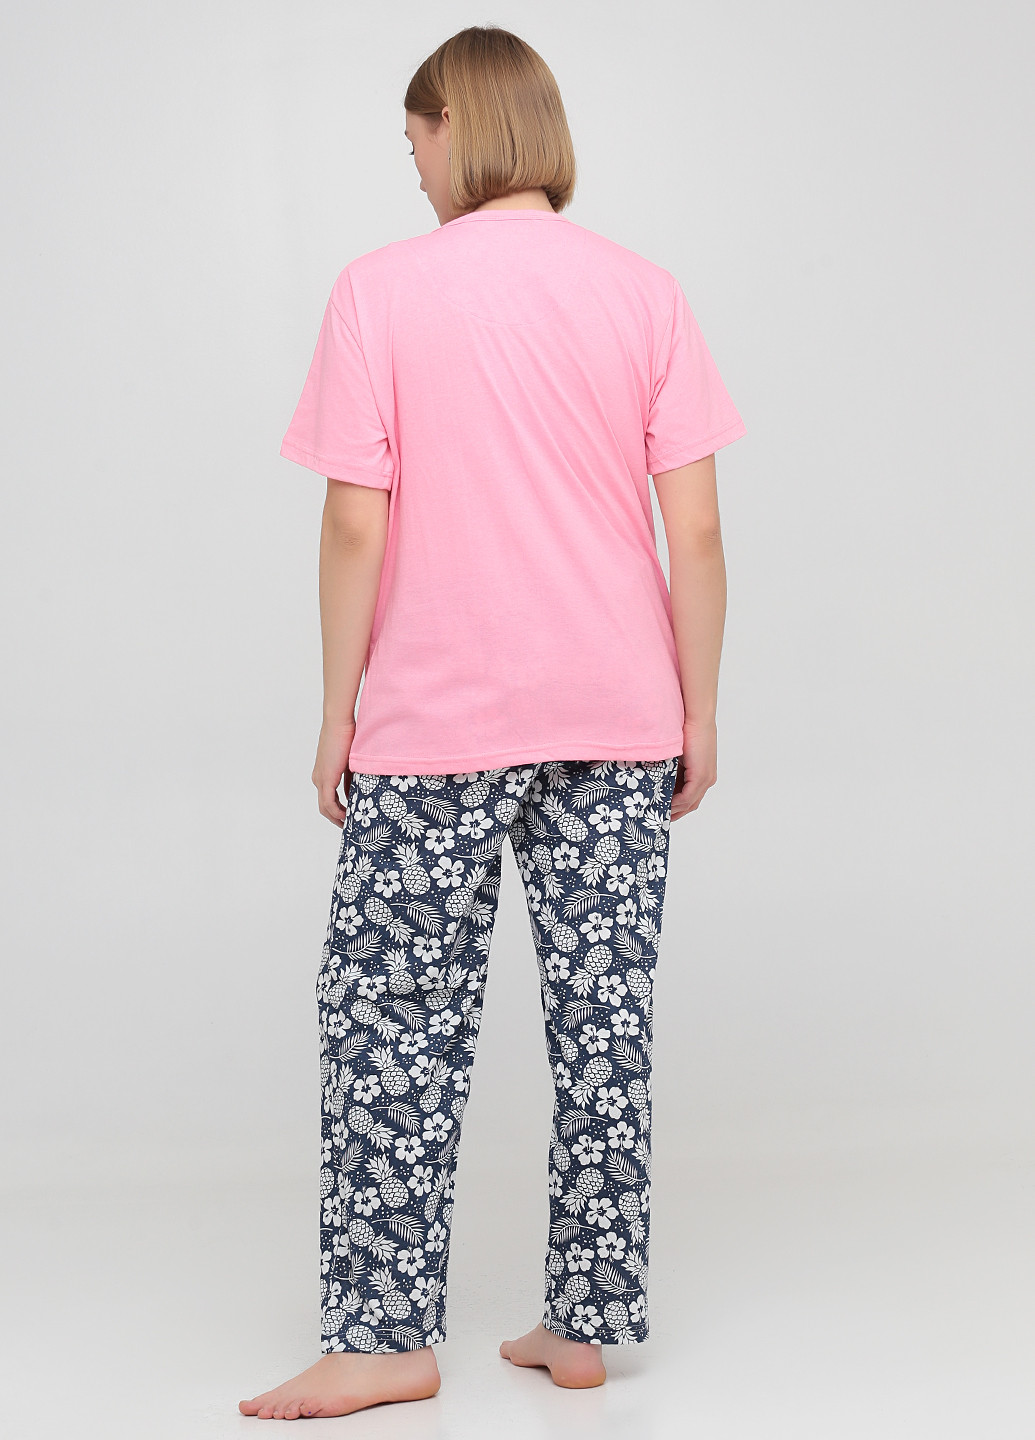 Розовая всесезон пижама (футболка, брюки) футболка + брюки Marilynmod